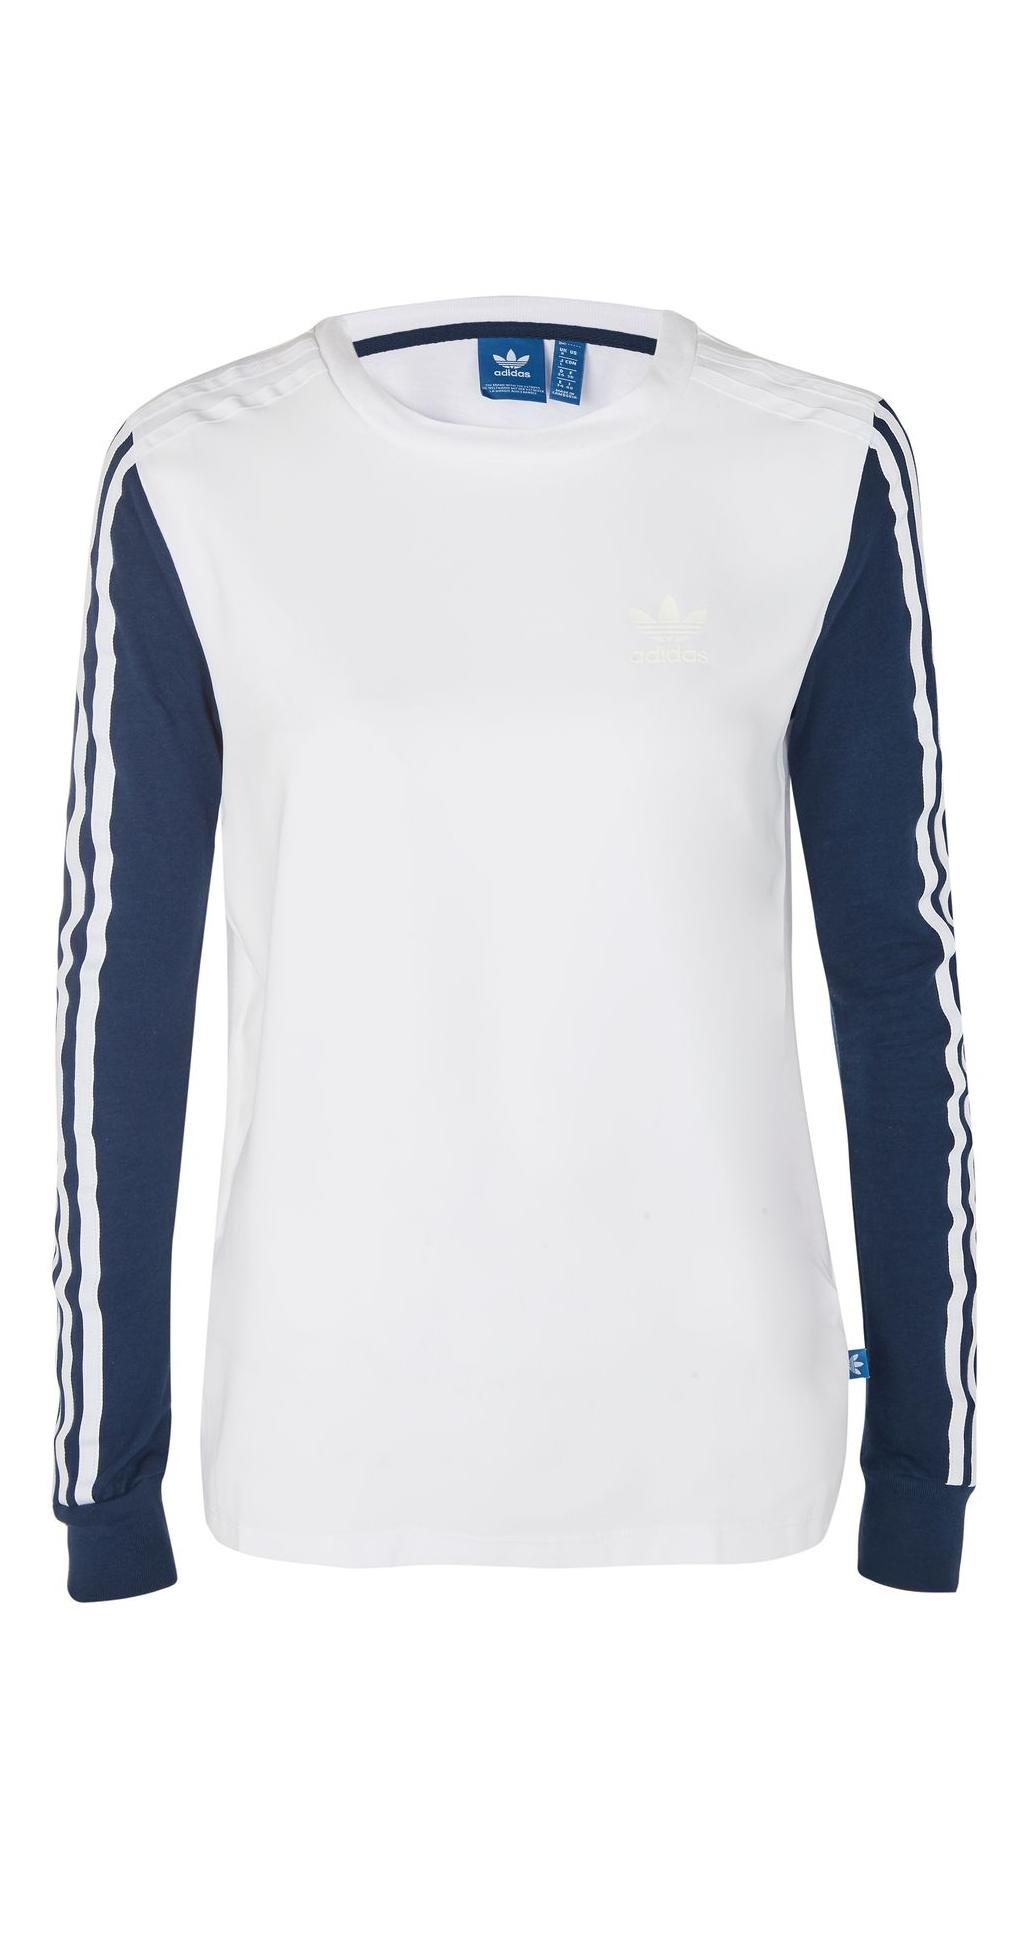 3 Stripe Long Sleeve T-Shirt by Adidas Originals, Top Shop, €46